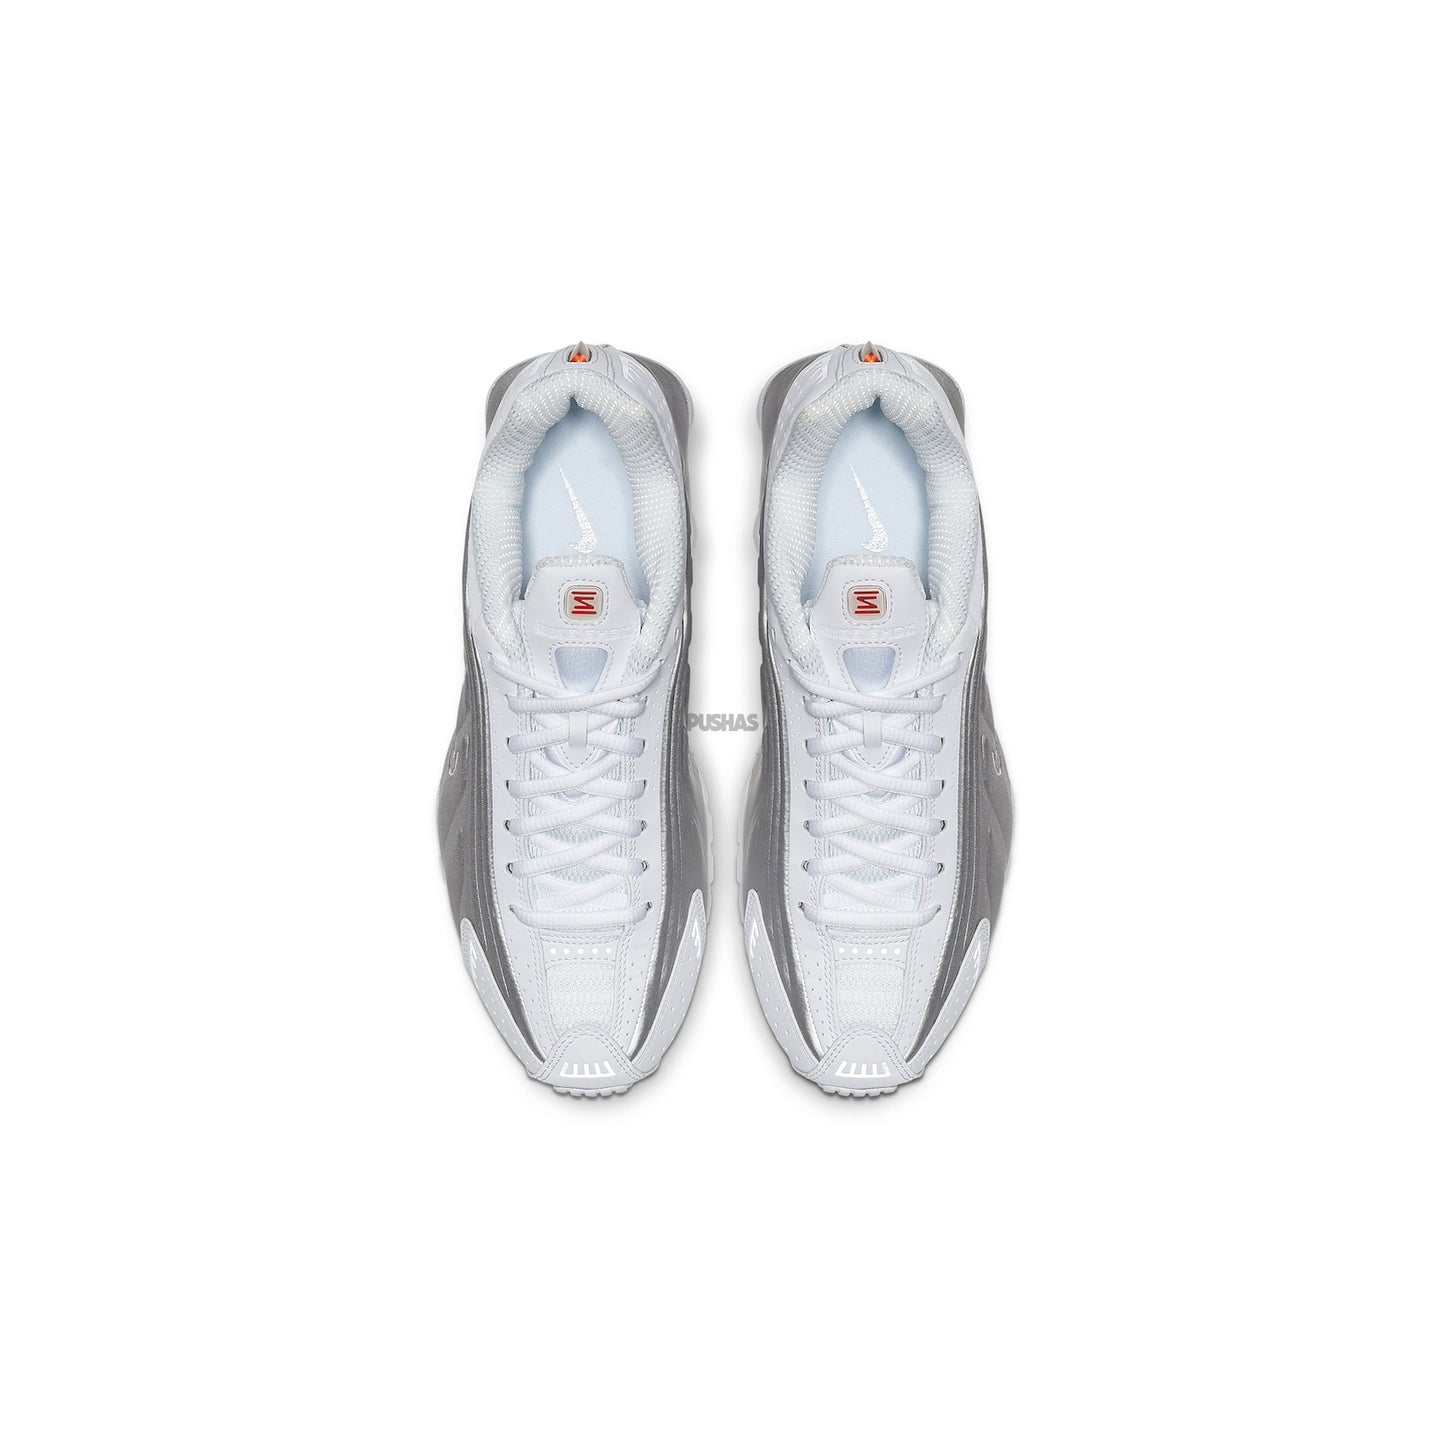 Nike Shox R4 'White Metallic' Women's (2019)